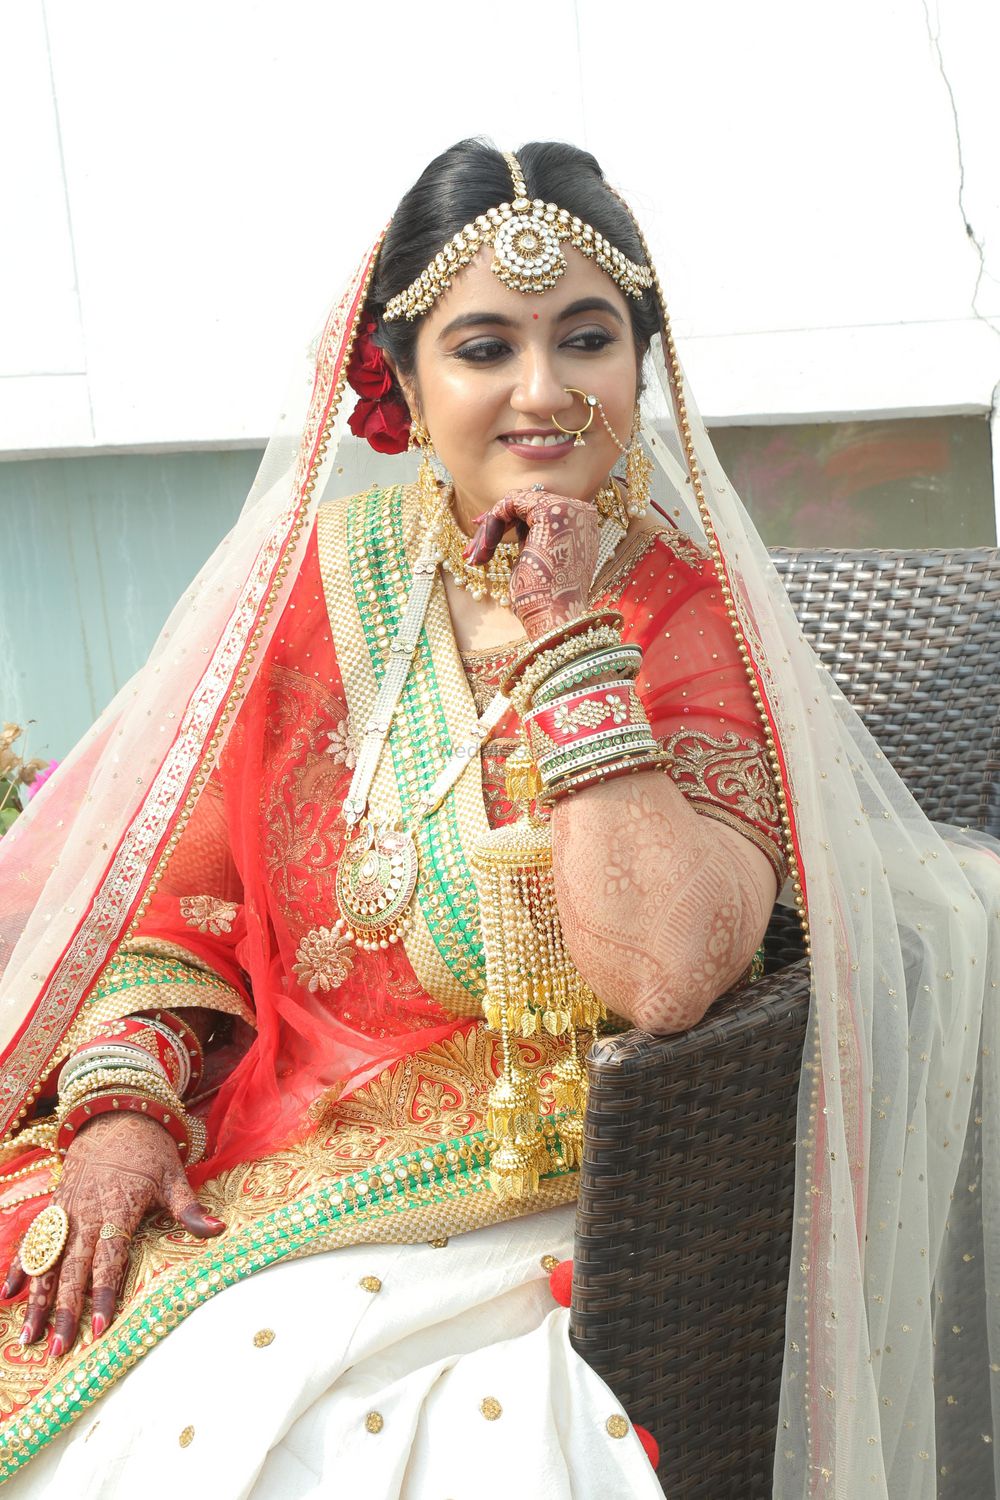 Photo From Wedding - By Shivali Desai